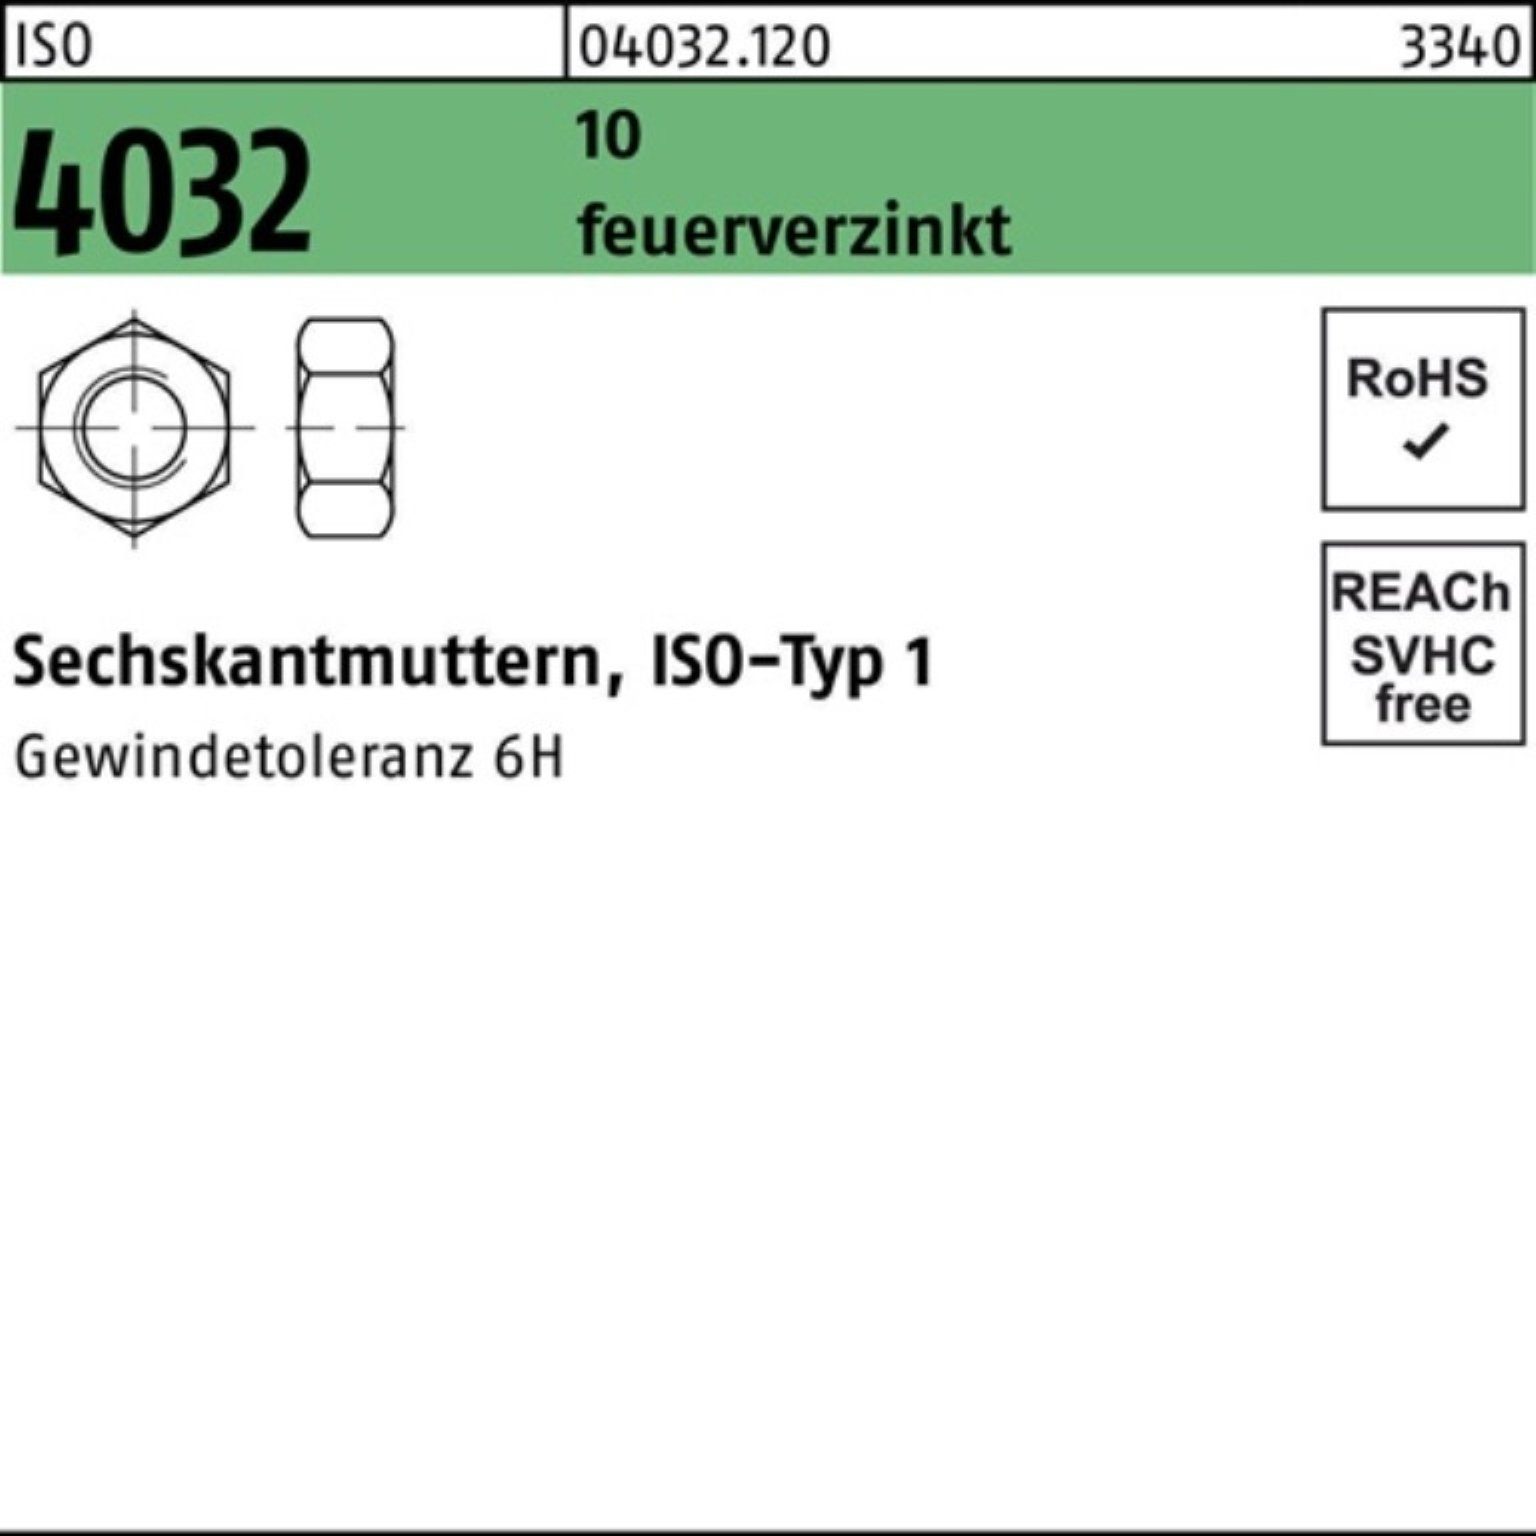 Bufab Muttern 100er Pack Sechskantmutter ISO 4032 M48 10 feuerverz. 1 Stück ISO 403